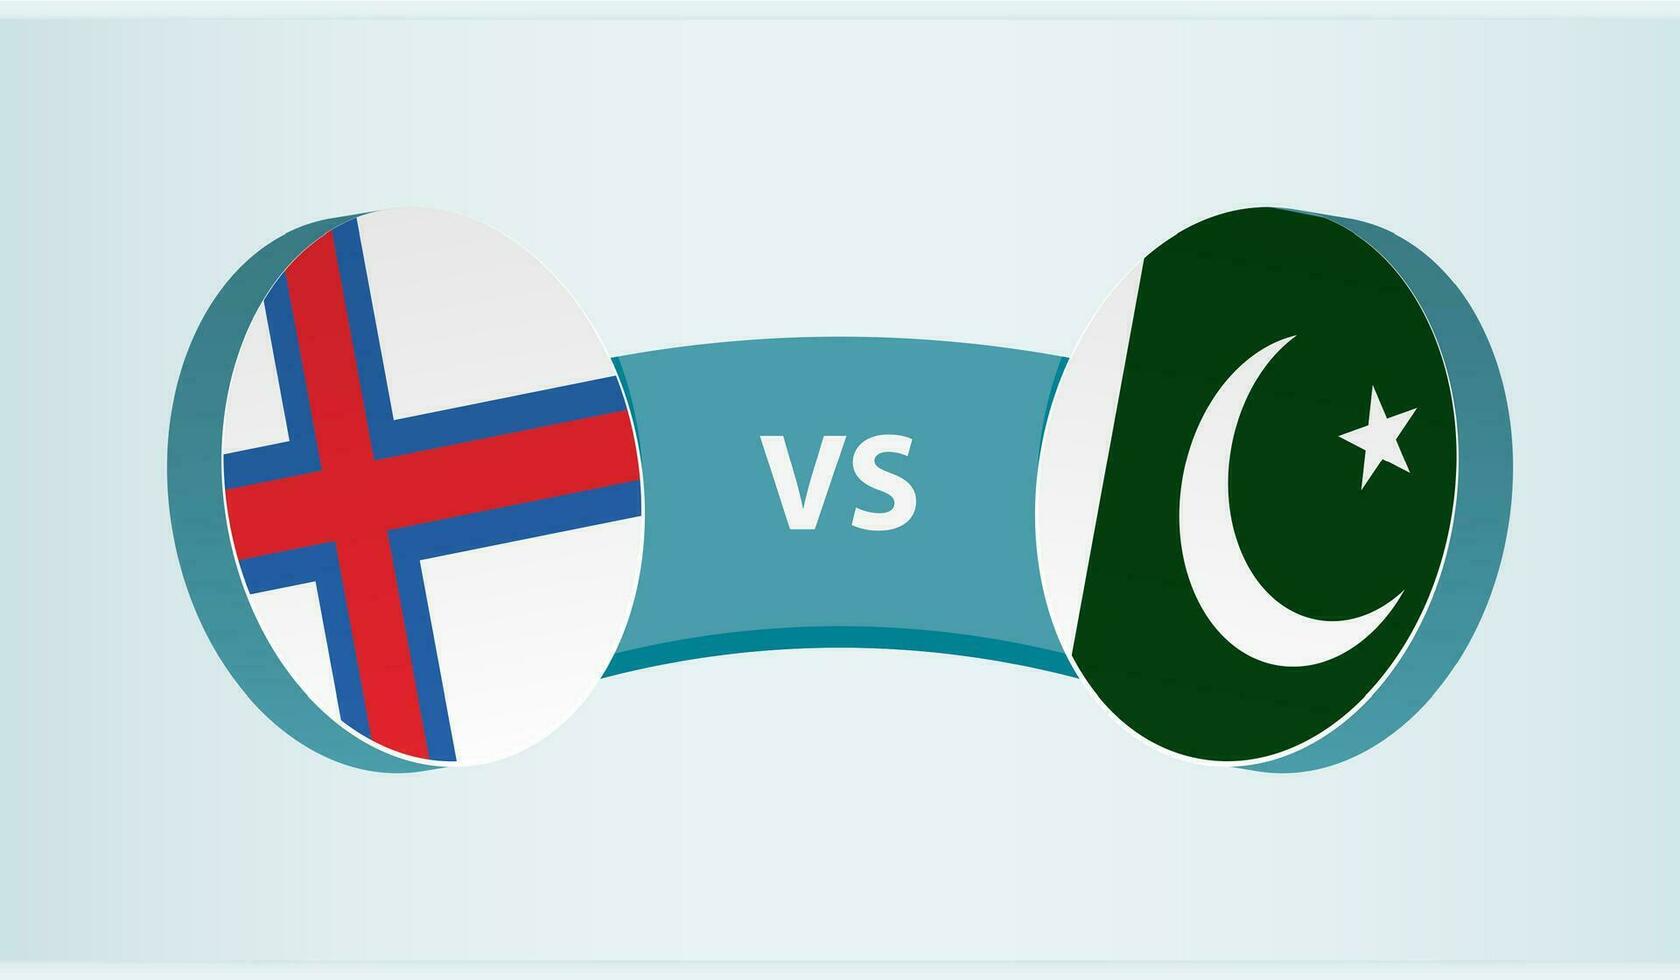 Faroe Islands versus Pakistan, team sports competition concept. vector